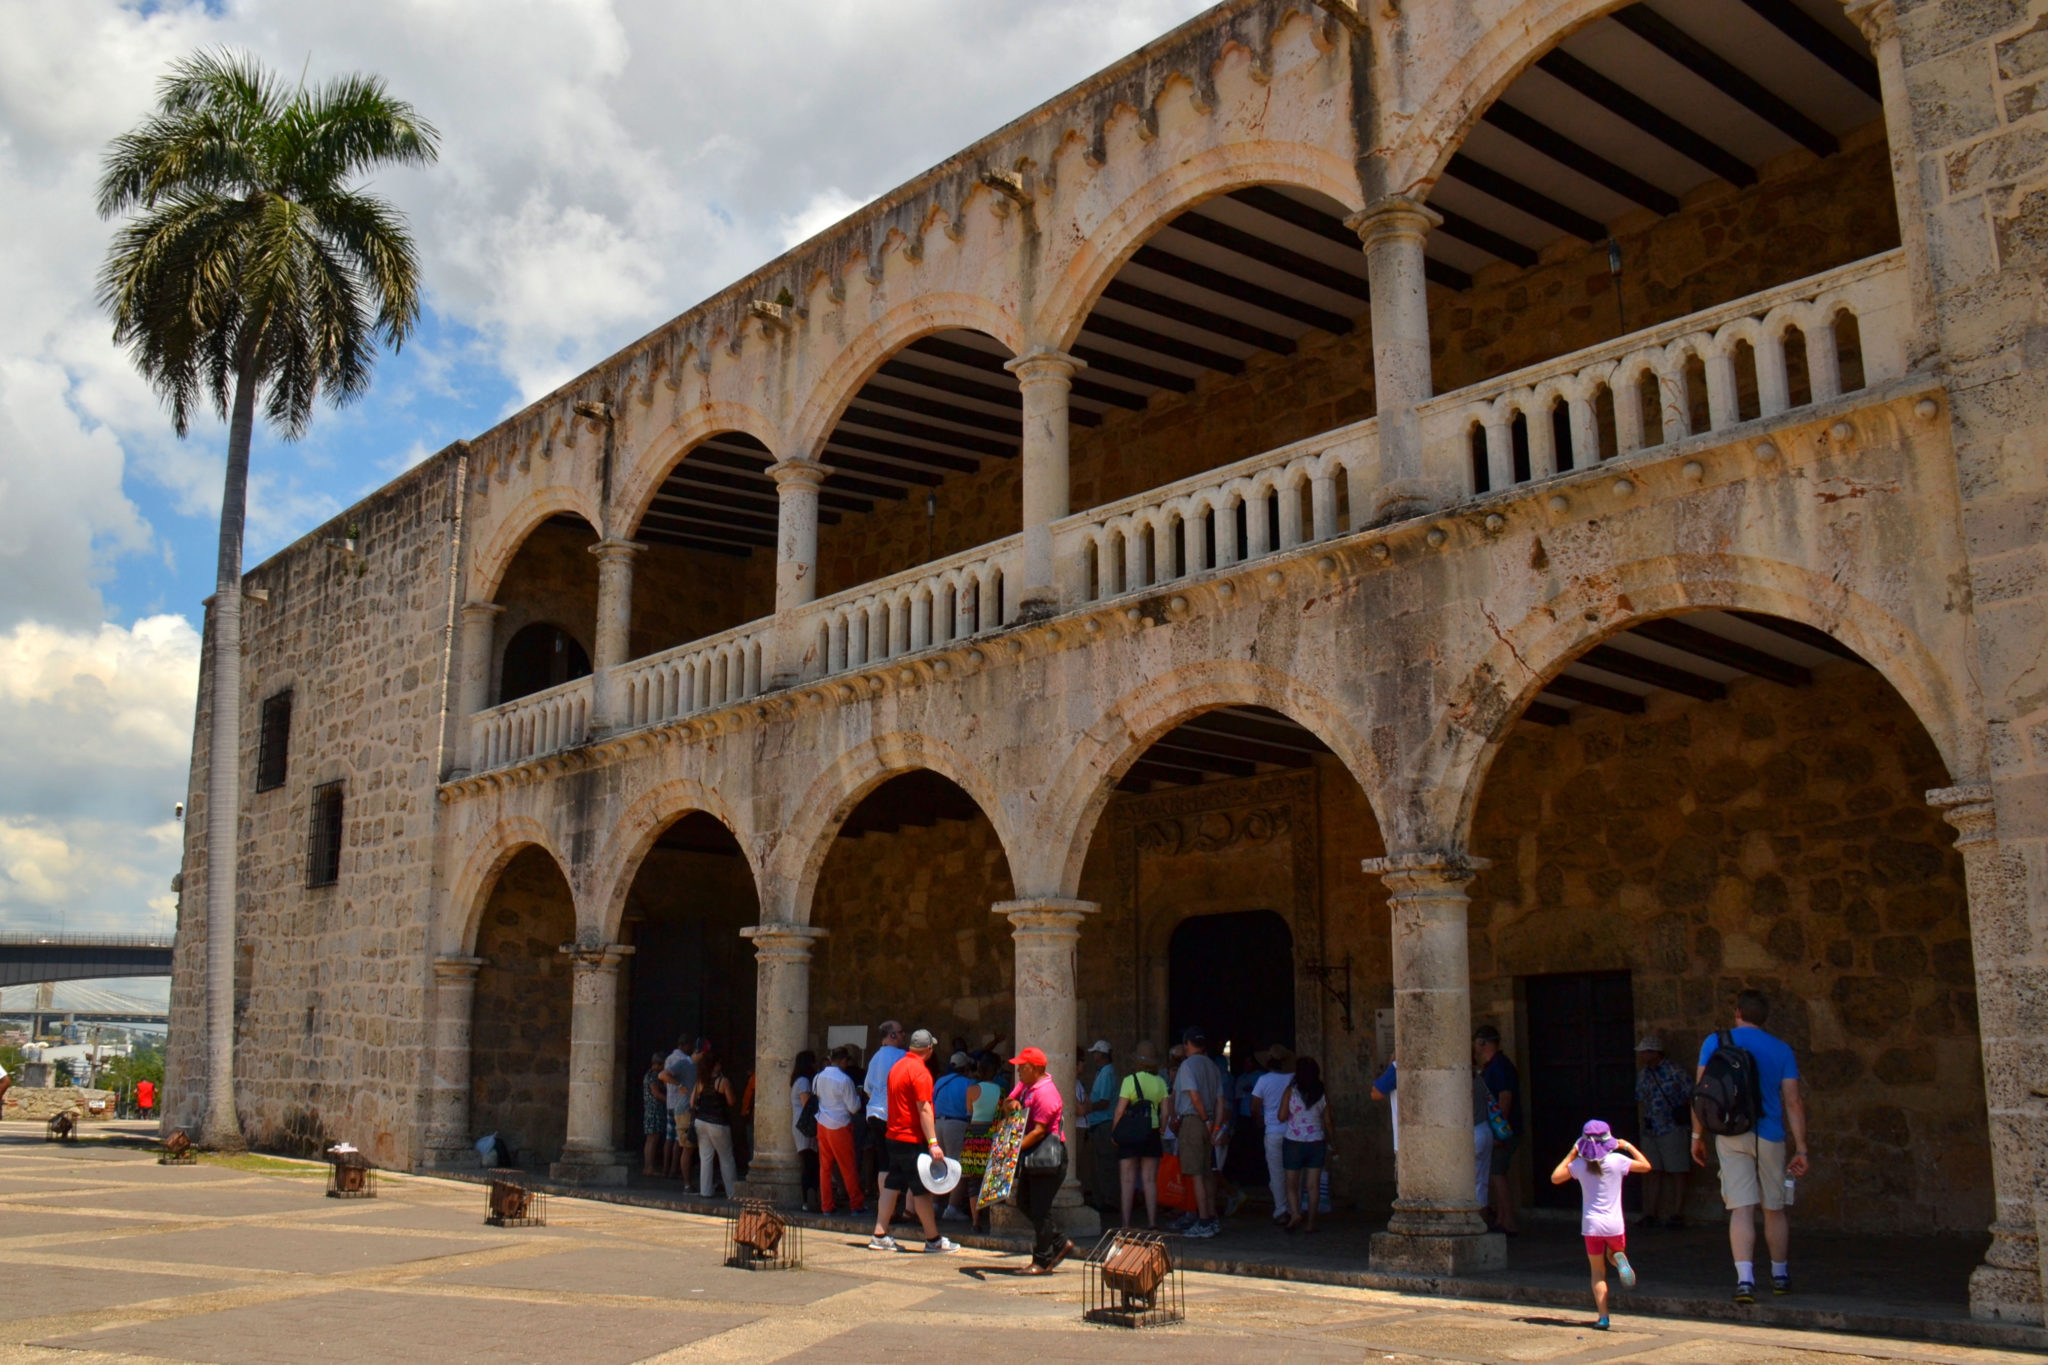 The Columbus Castle (Alcazar de Colon) in Santo Domingo